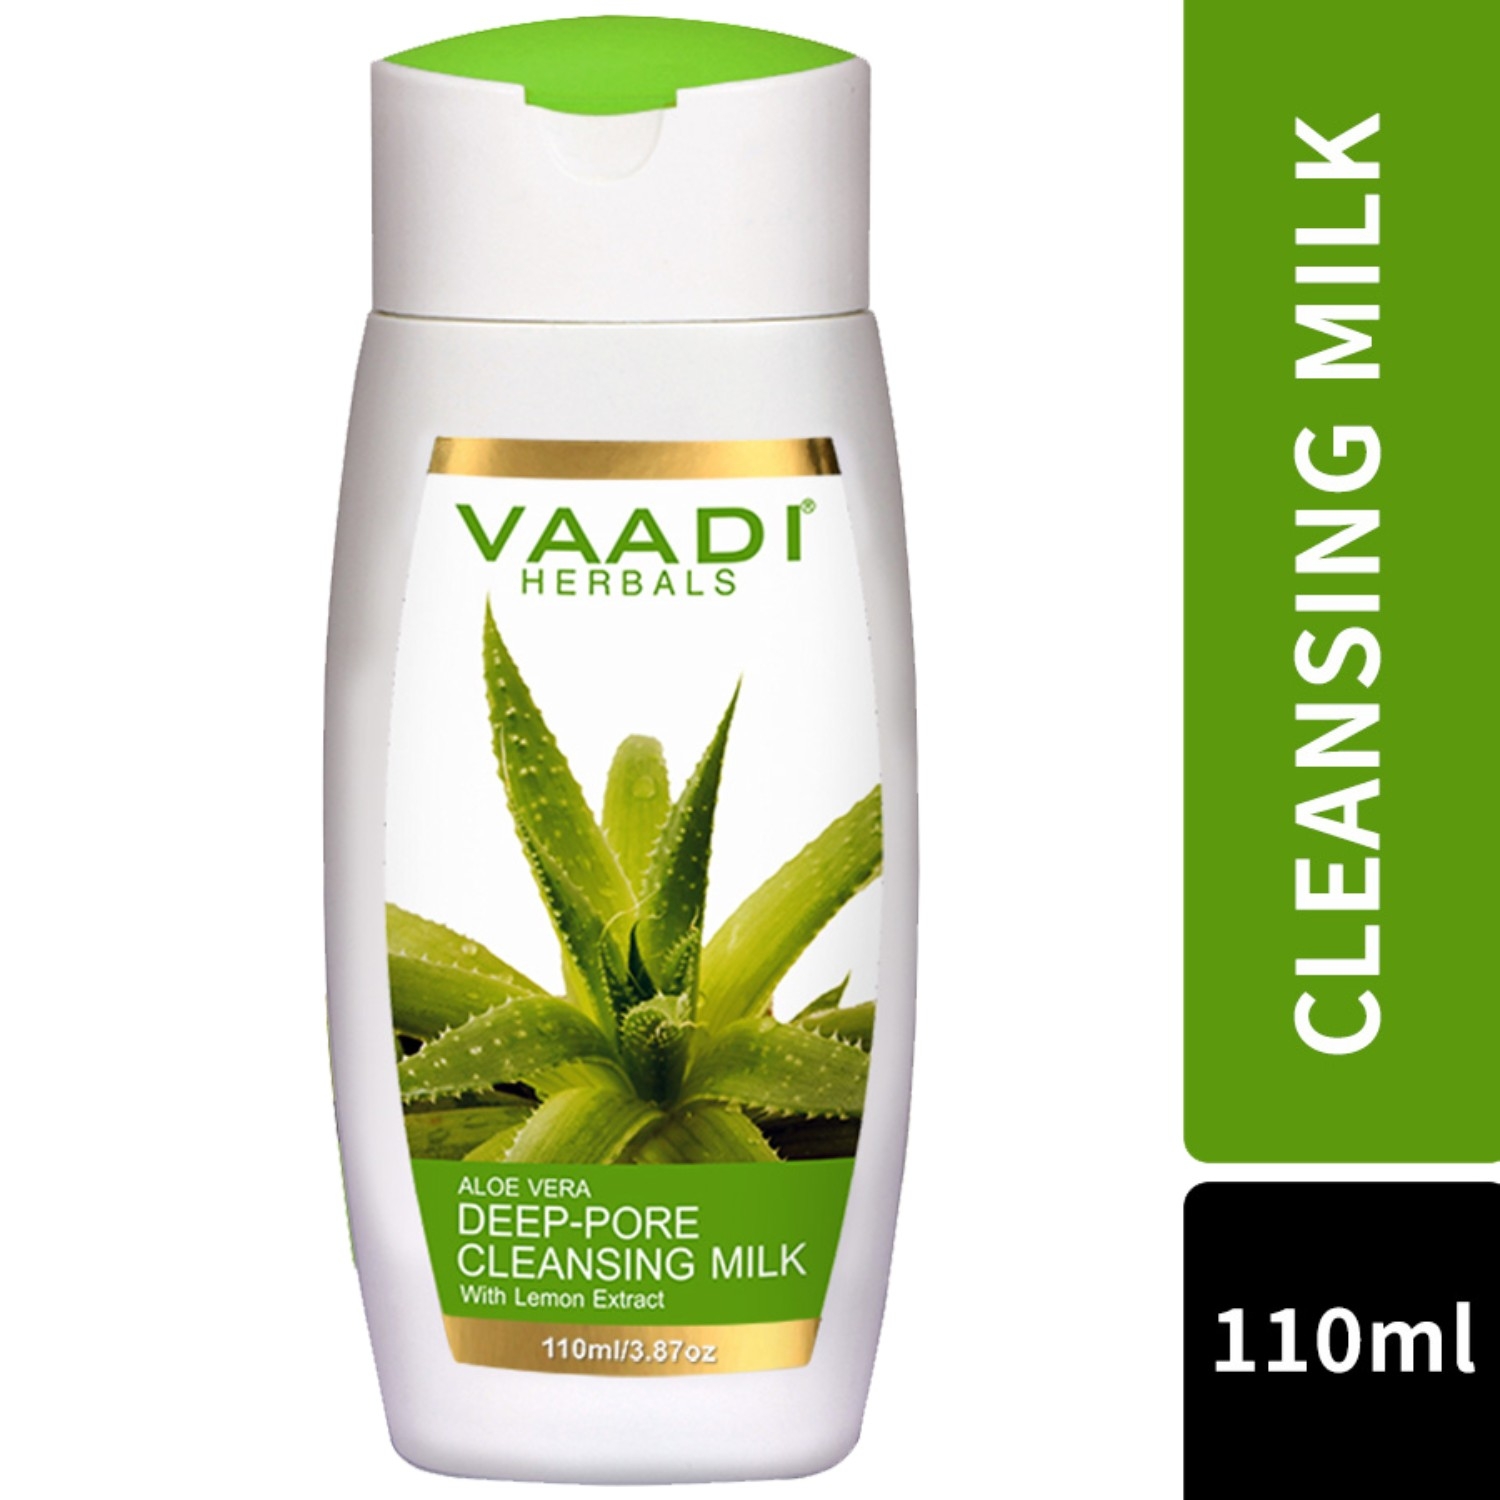 Vaadi Herbals | Vaadi Herbals Aloe Vera Deep-Pore Cleansing Milk (110ml)